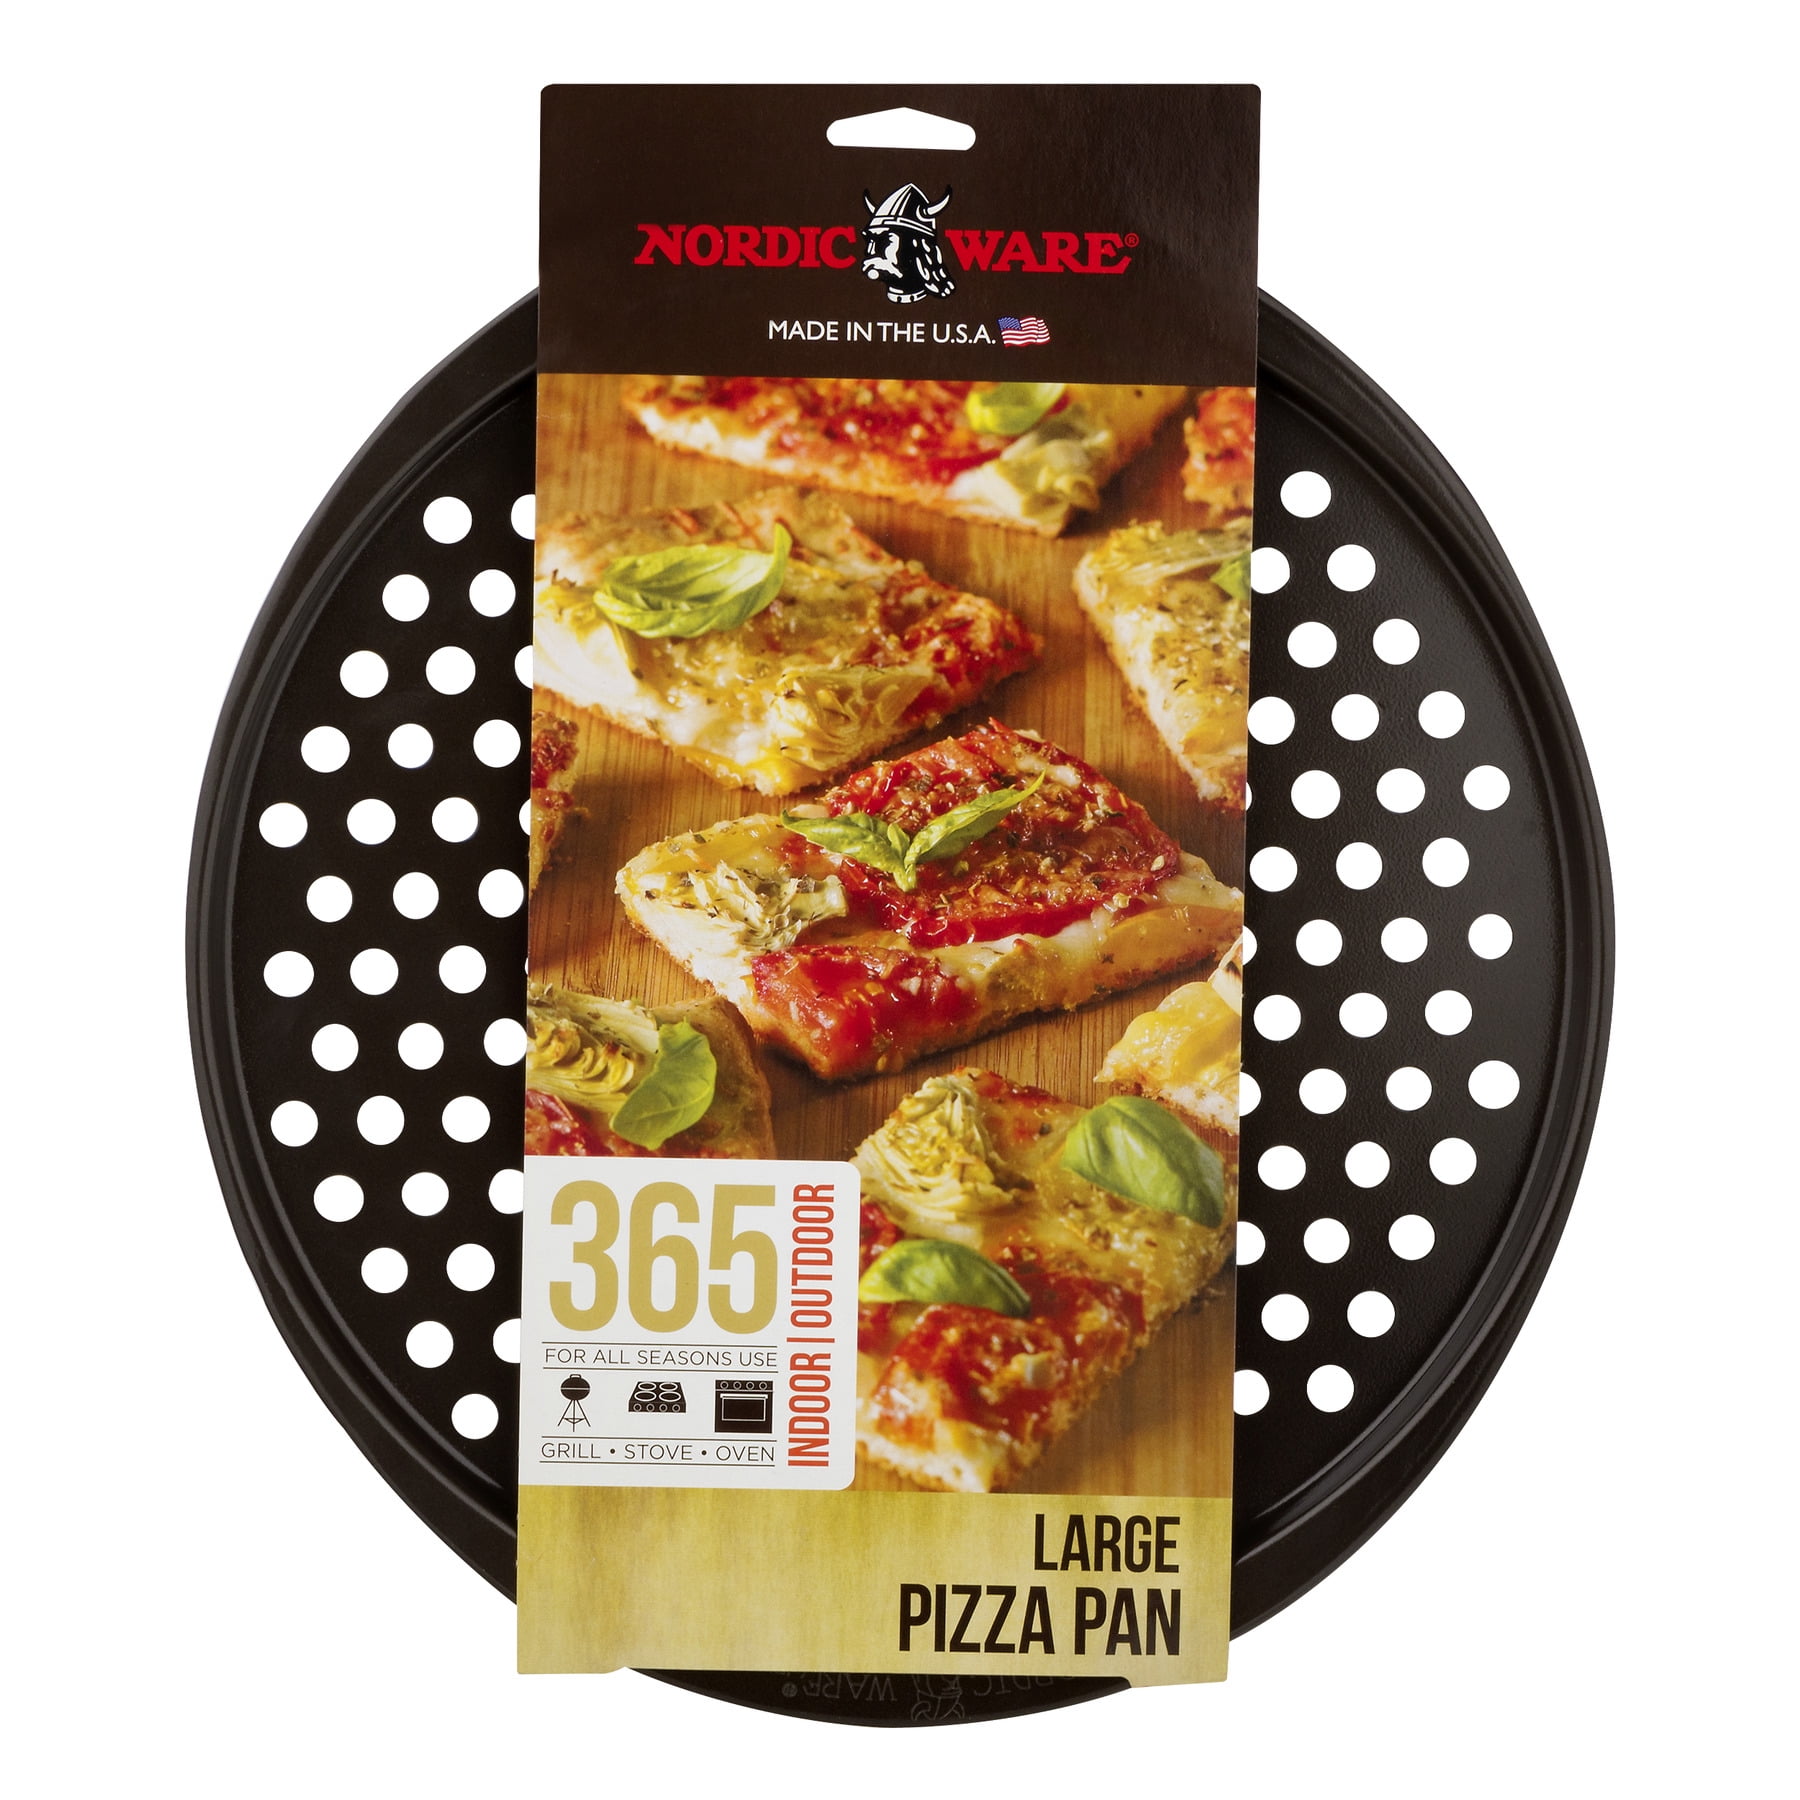  Nordic Ware 365 Indoor/Outdoor Large Pizza Pan, 12-Inch: Home &  Kitchen